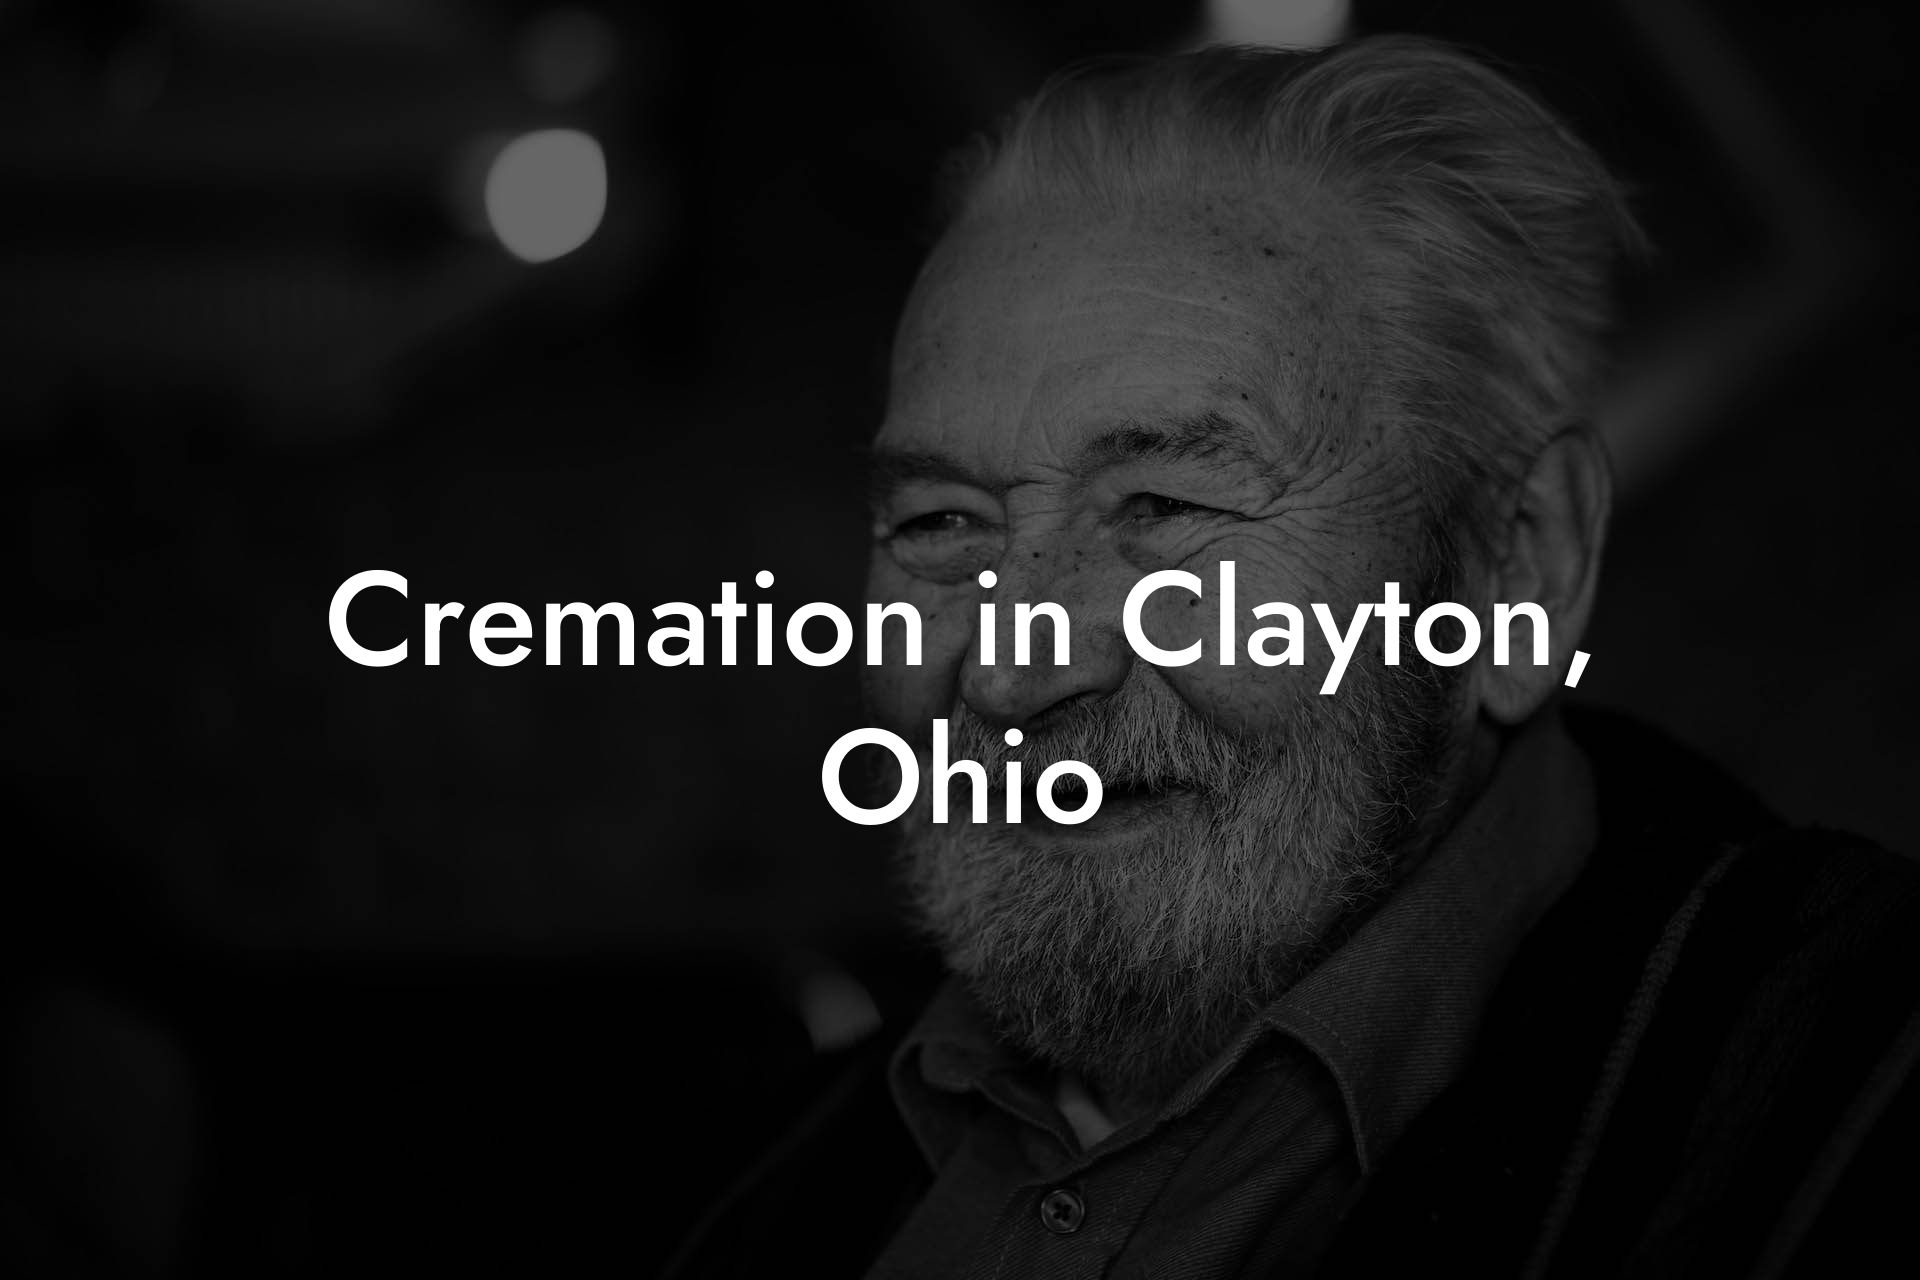 Cremation in Clayton, Ohio